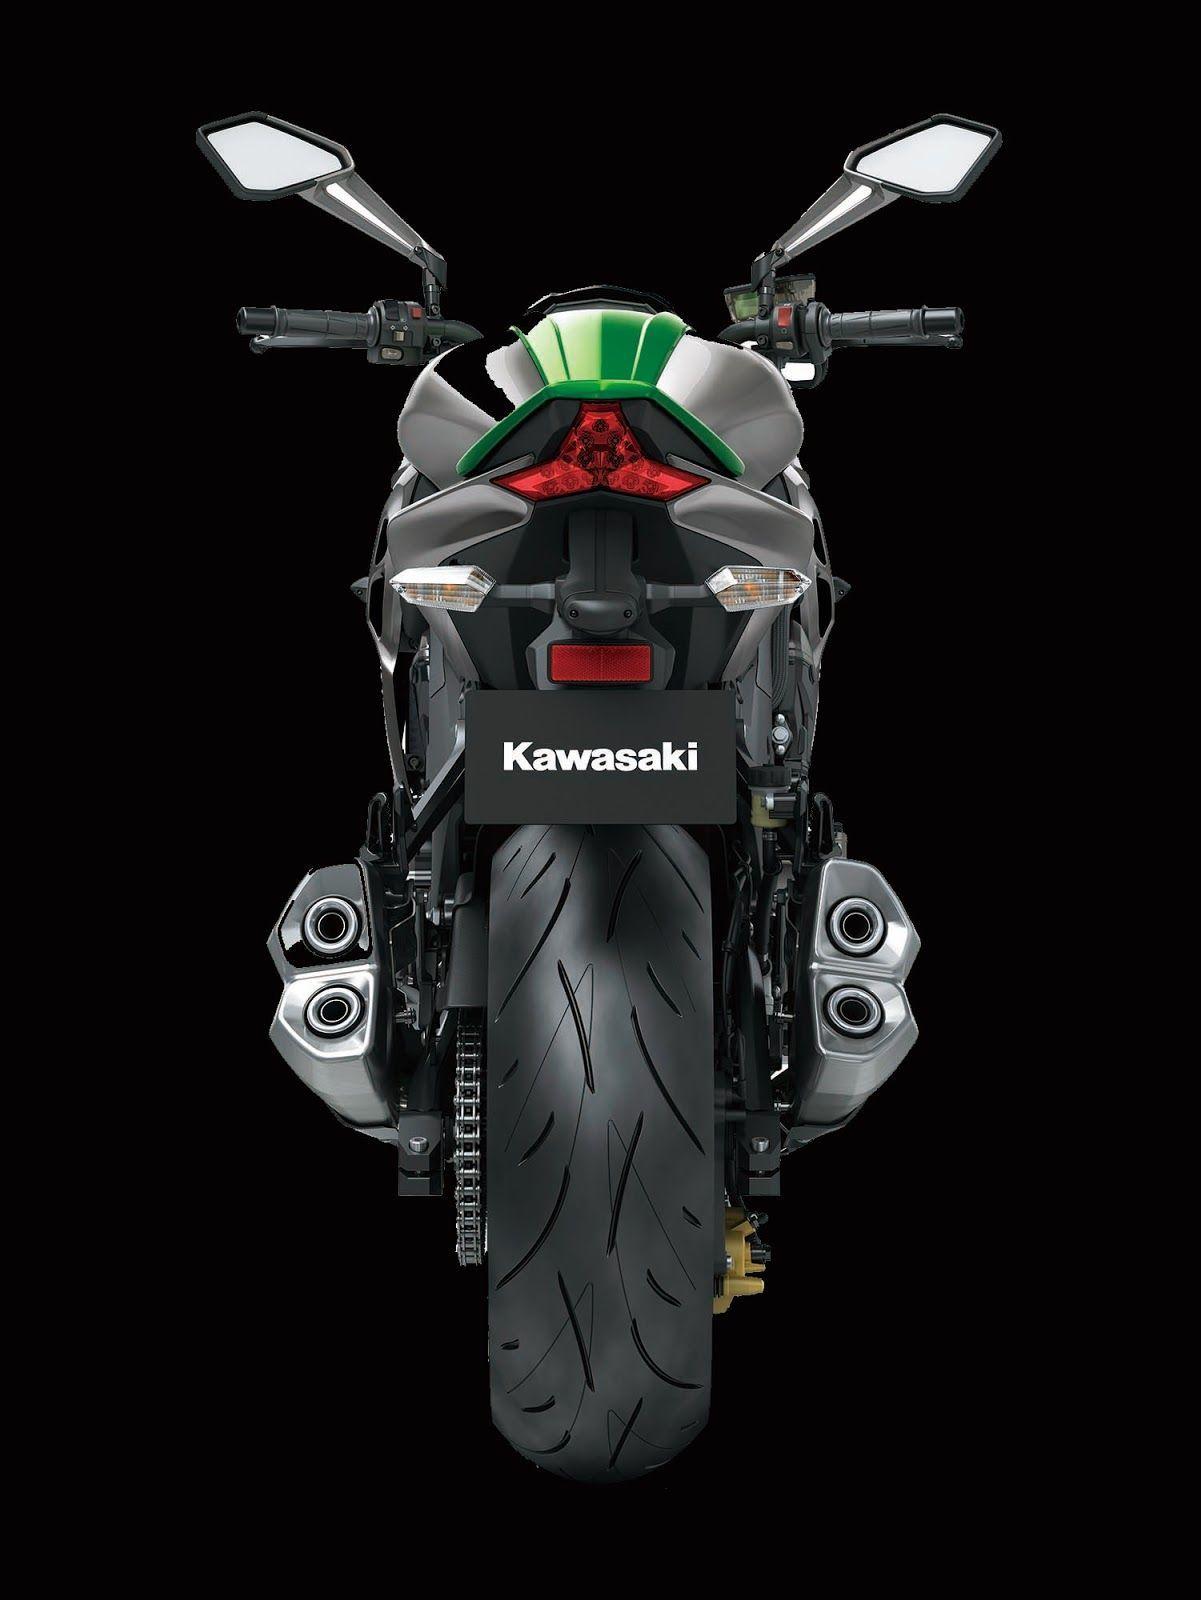 Kawasaki Z1000 india HD picture, Wallpaper, Stills, Image. TechGangs